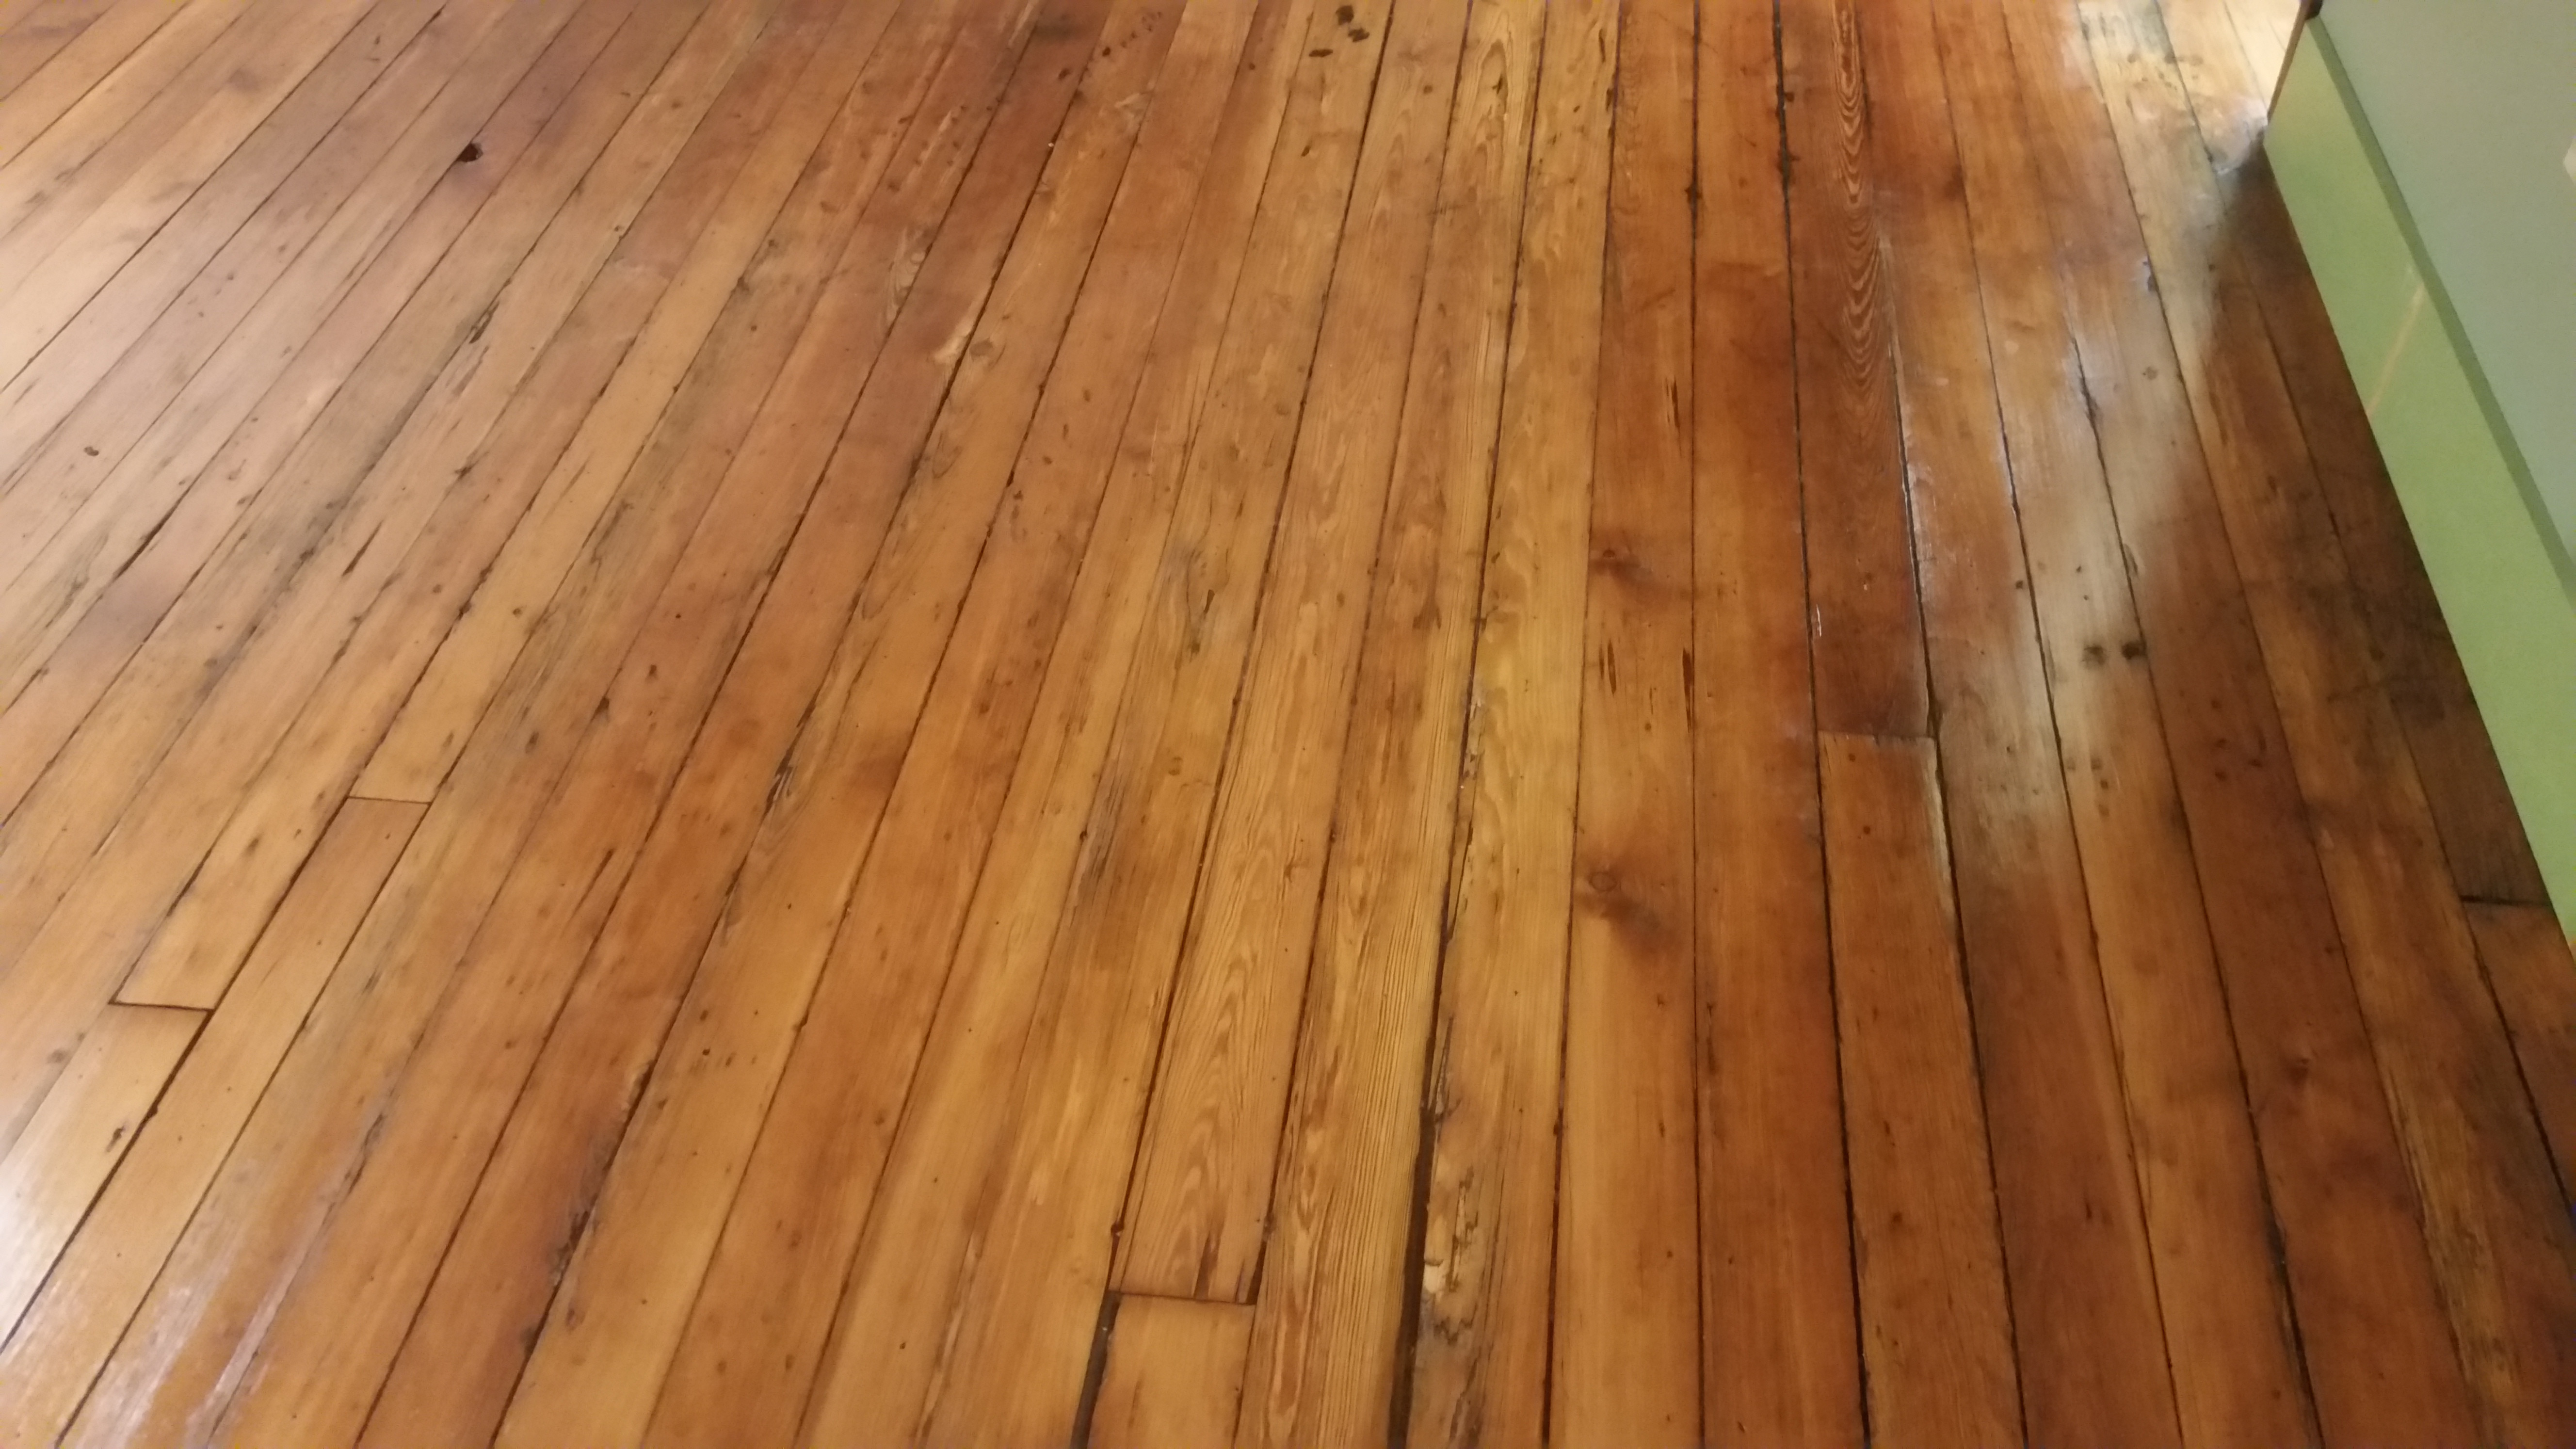 Hardwood Floor Cleaning Service Of Rochester Hardwood Floors Of Utica Home with Regard to 20150626 143515